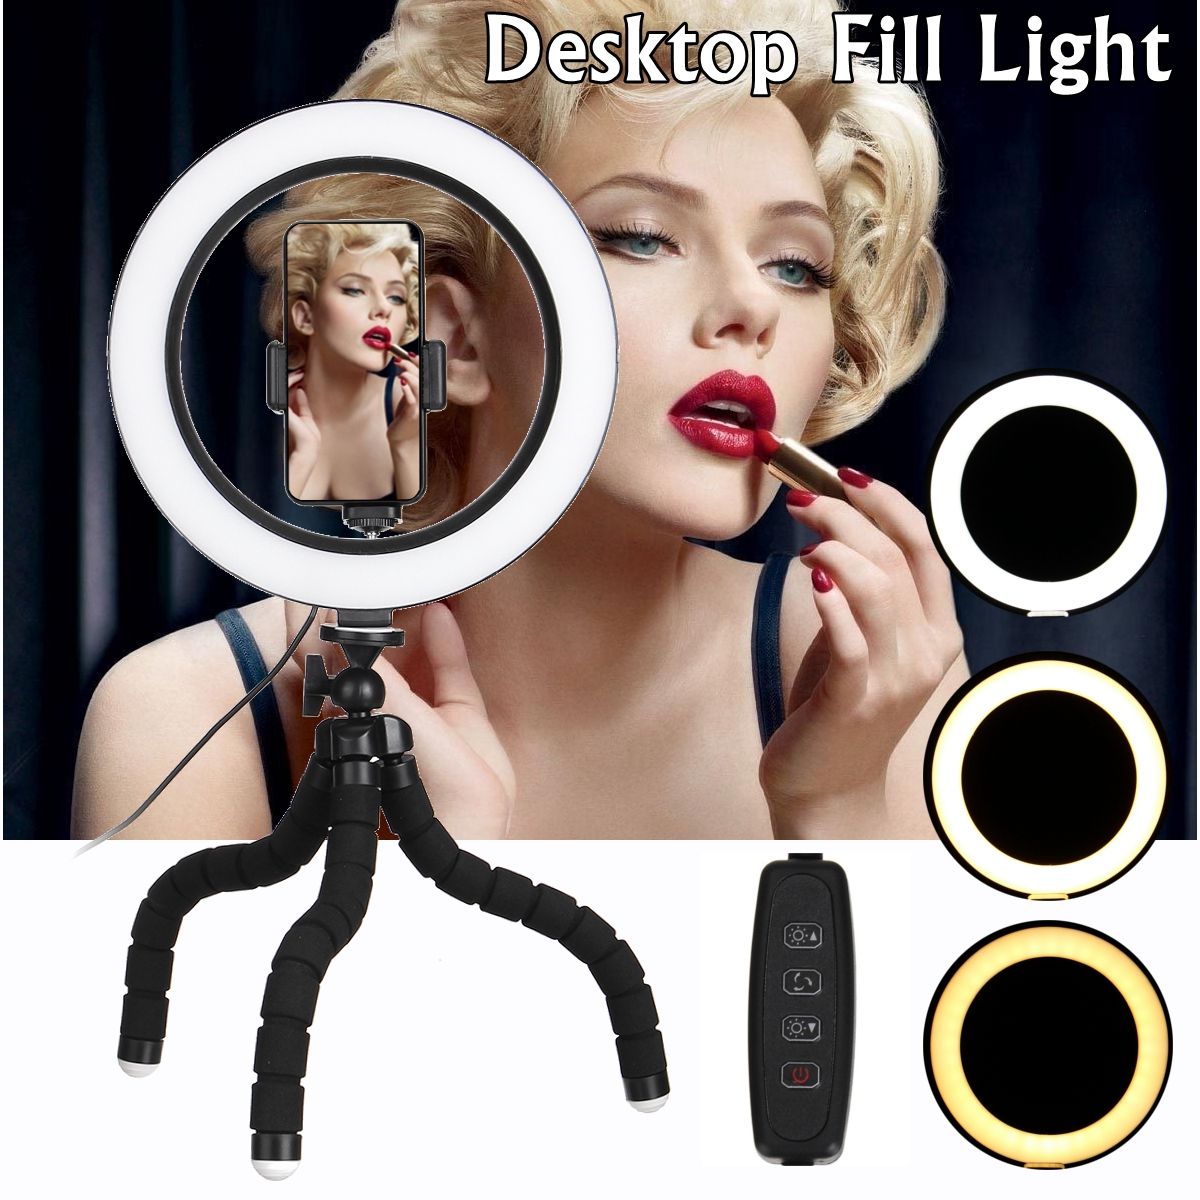 8311inch-810W-5680-Lamp-Beads-USB-Double-Bracket-Round-Tripod-Photography-Light-LED-Beauty-Fill-Ligh-1639940